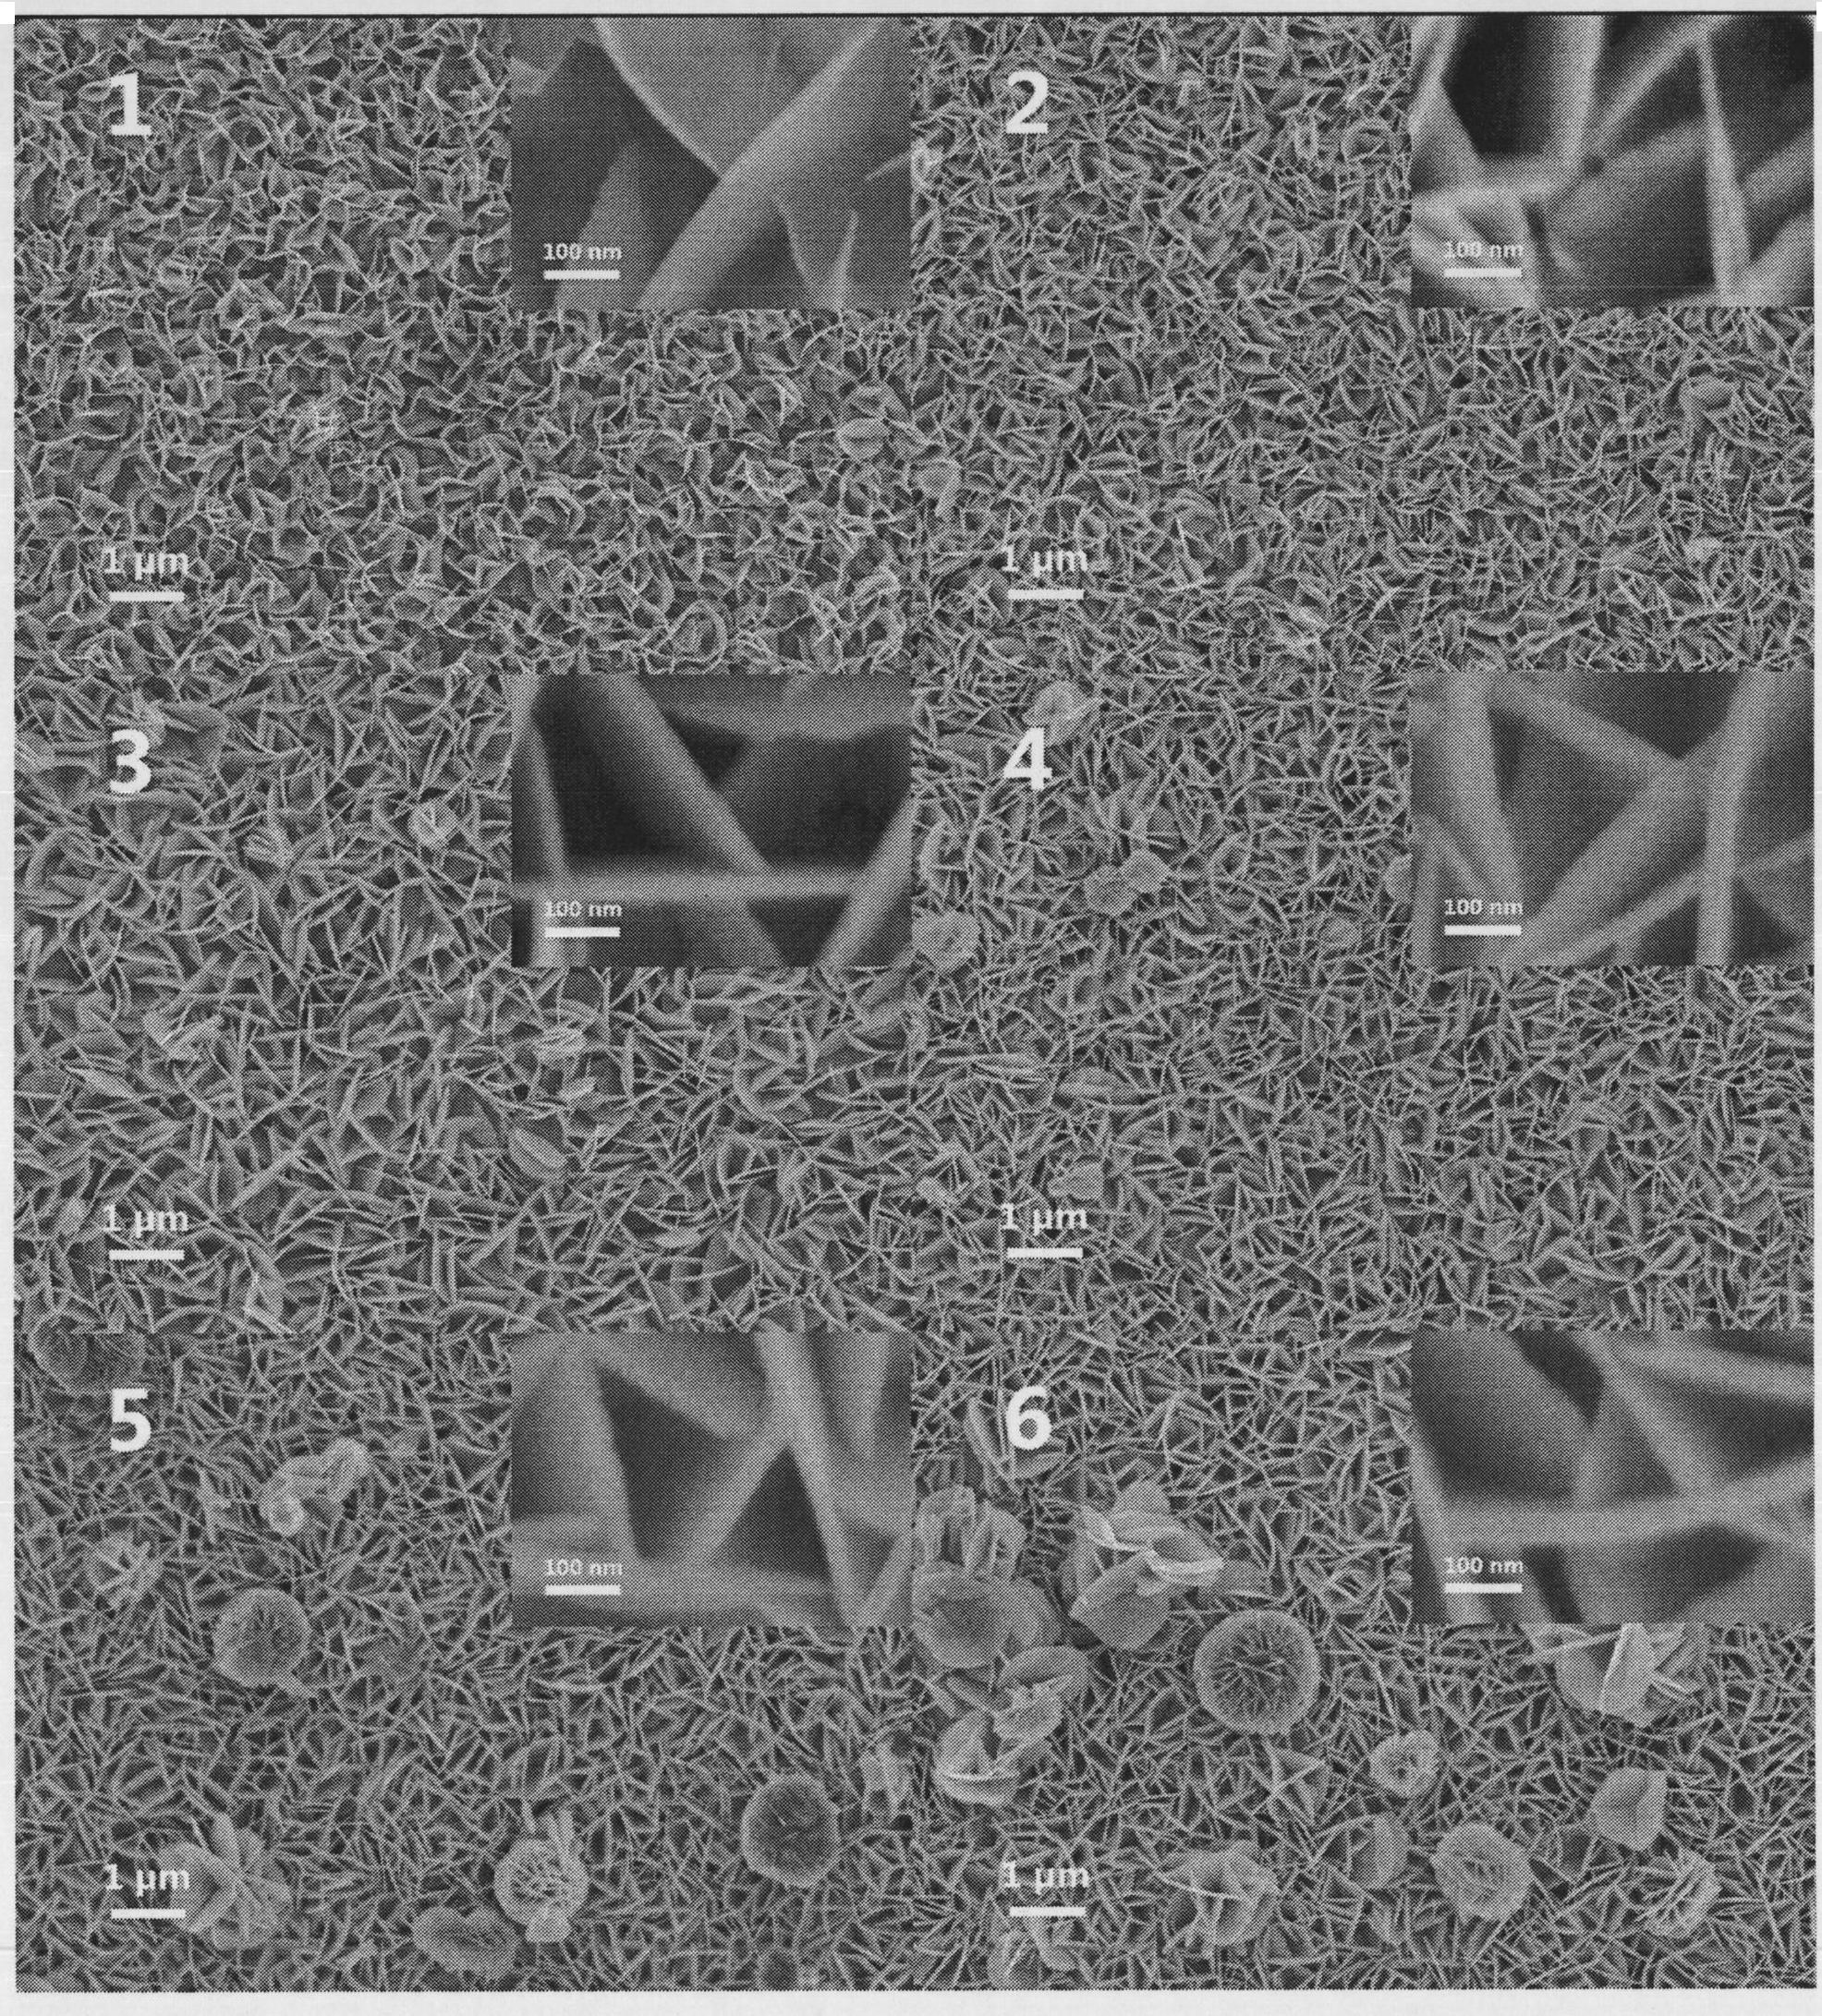 Method for preparing sheet-shaped bismuth oxyiodide (BiOI) nano-film electrode